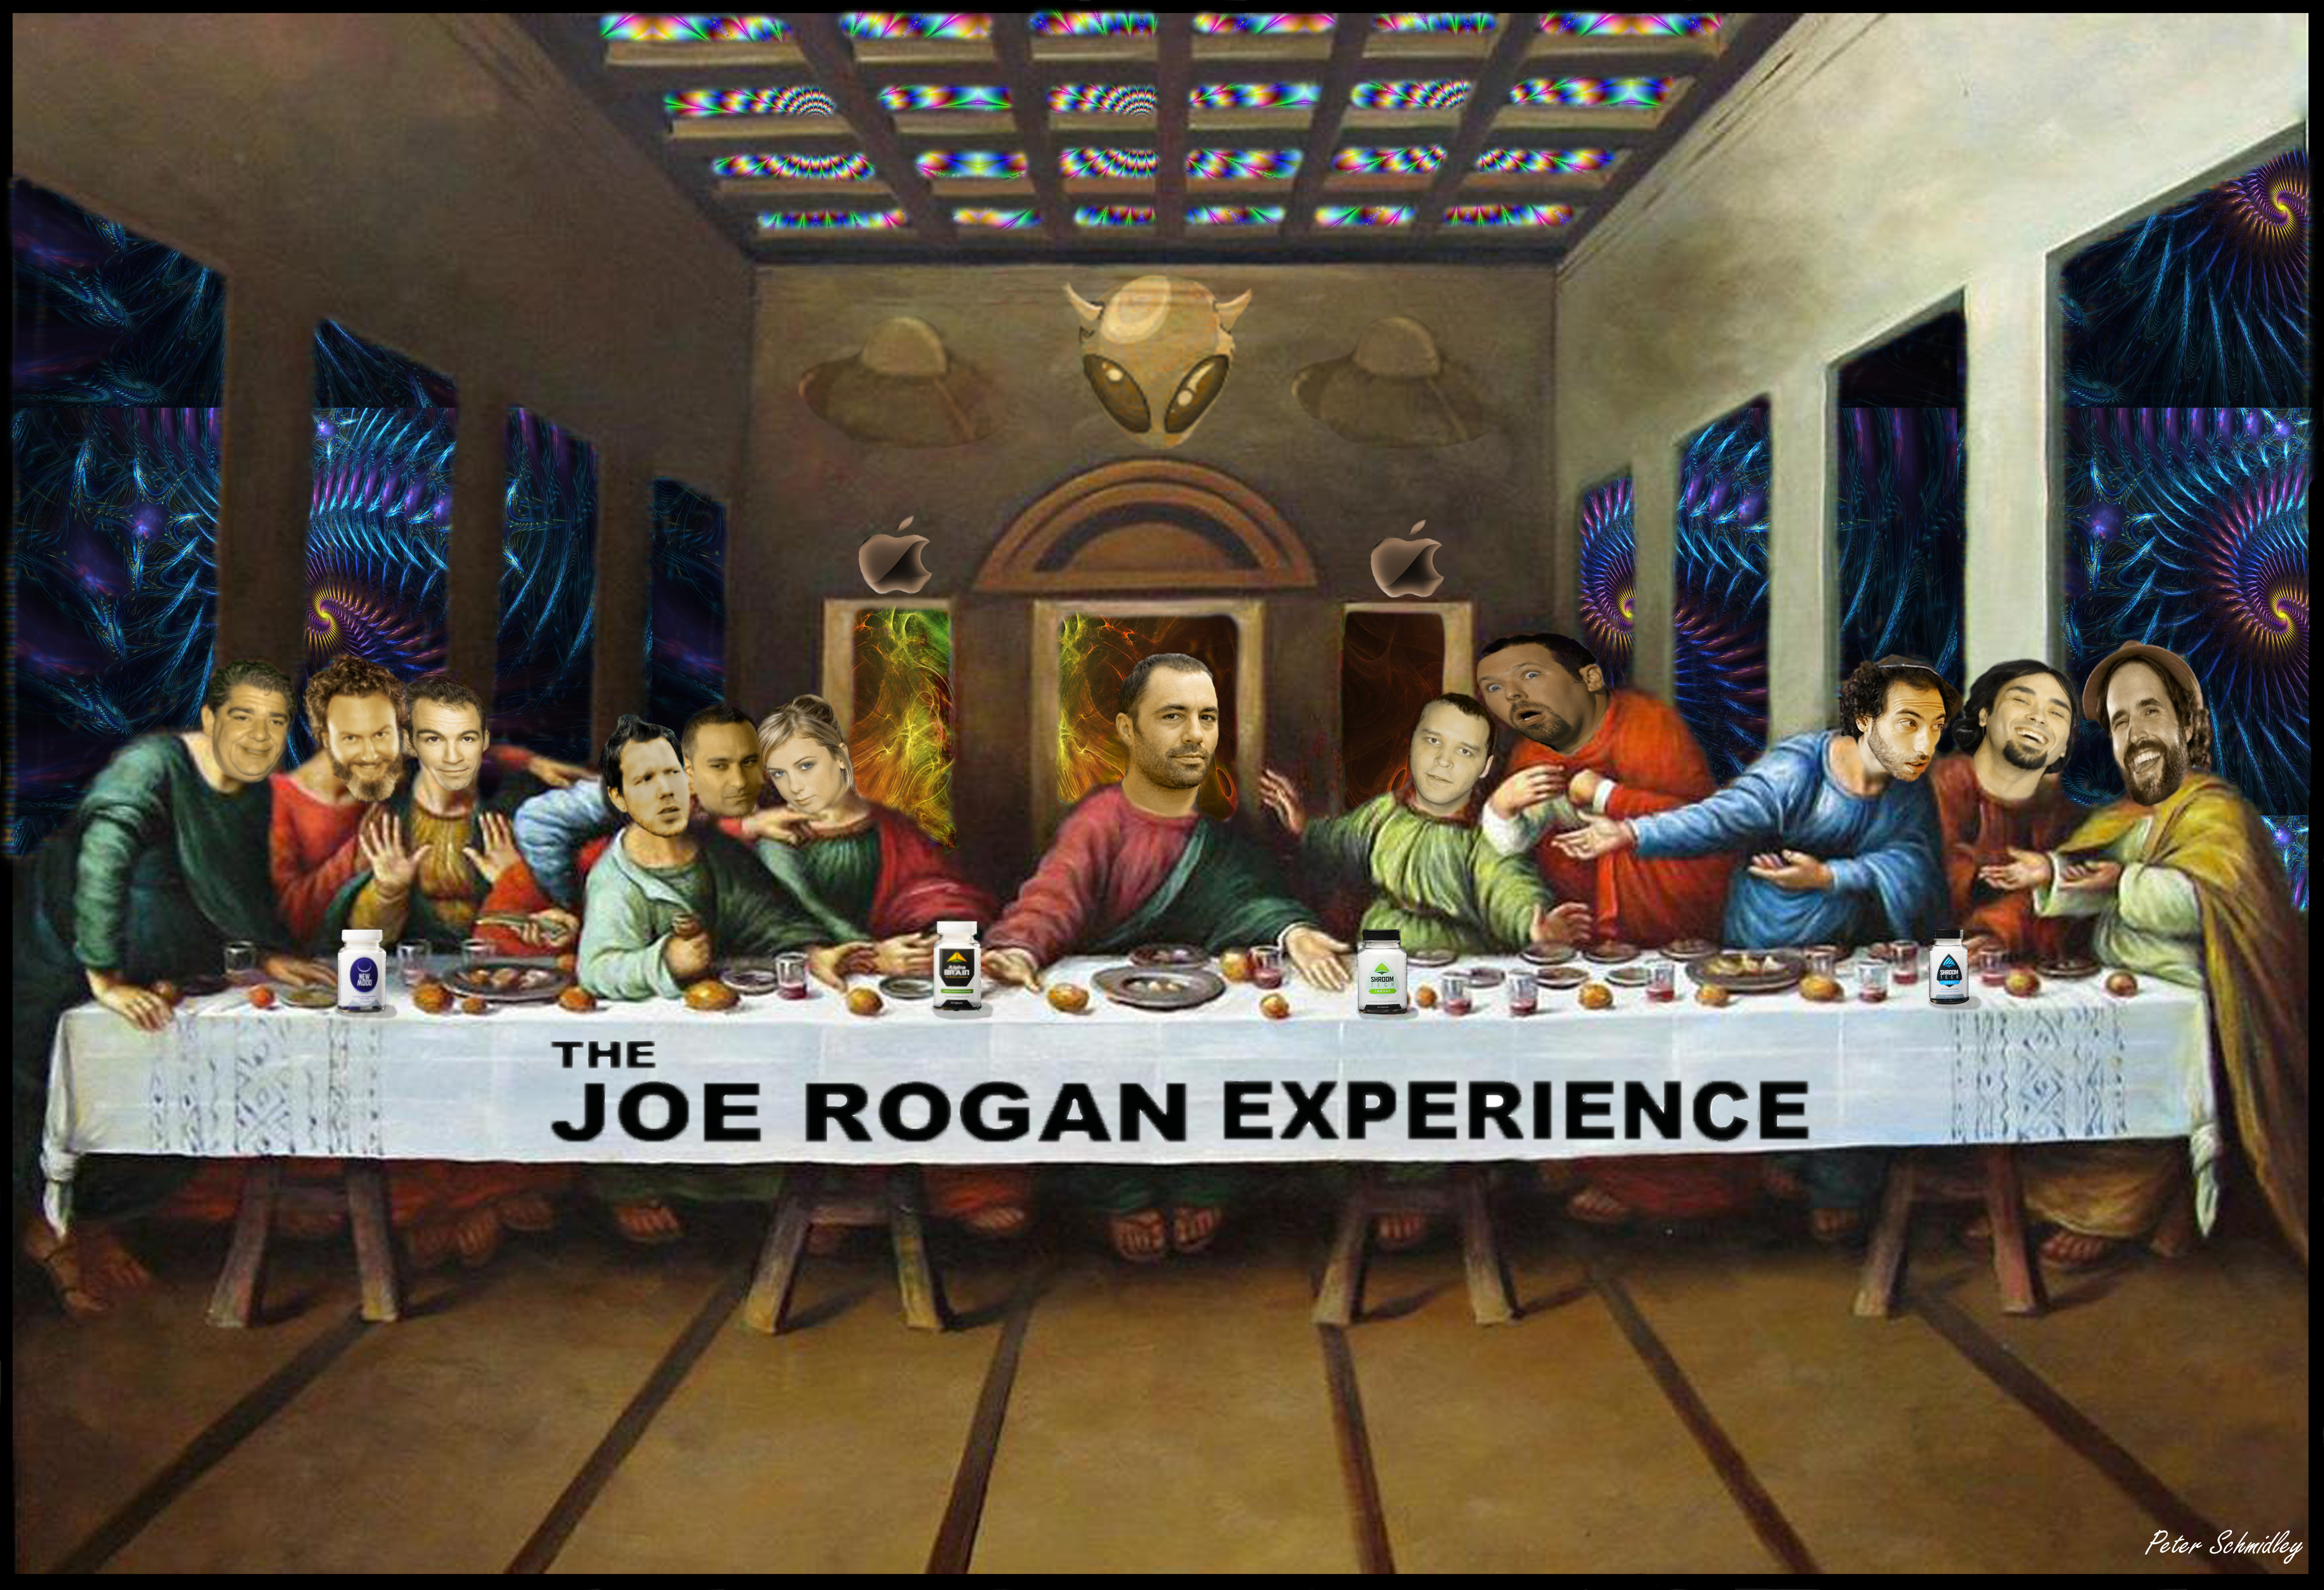 The Last Joe Rogan Experience by pschmidley on DeviantArt